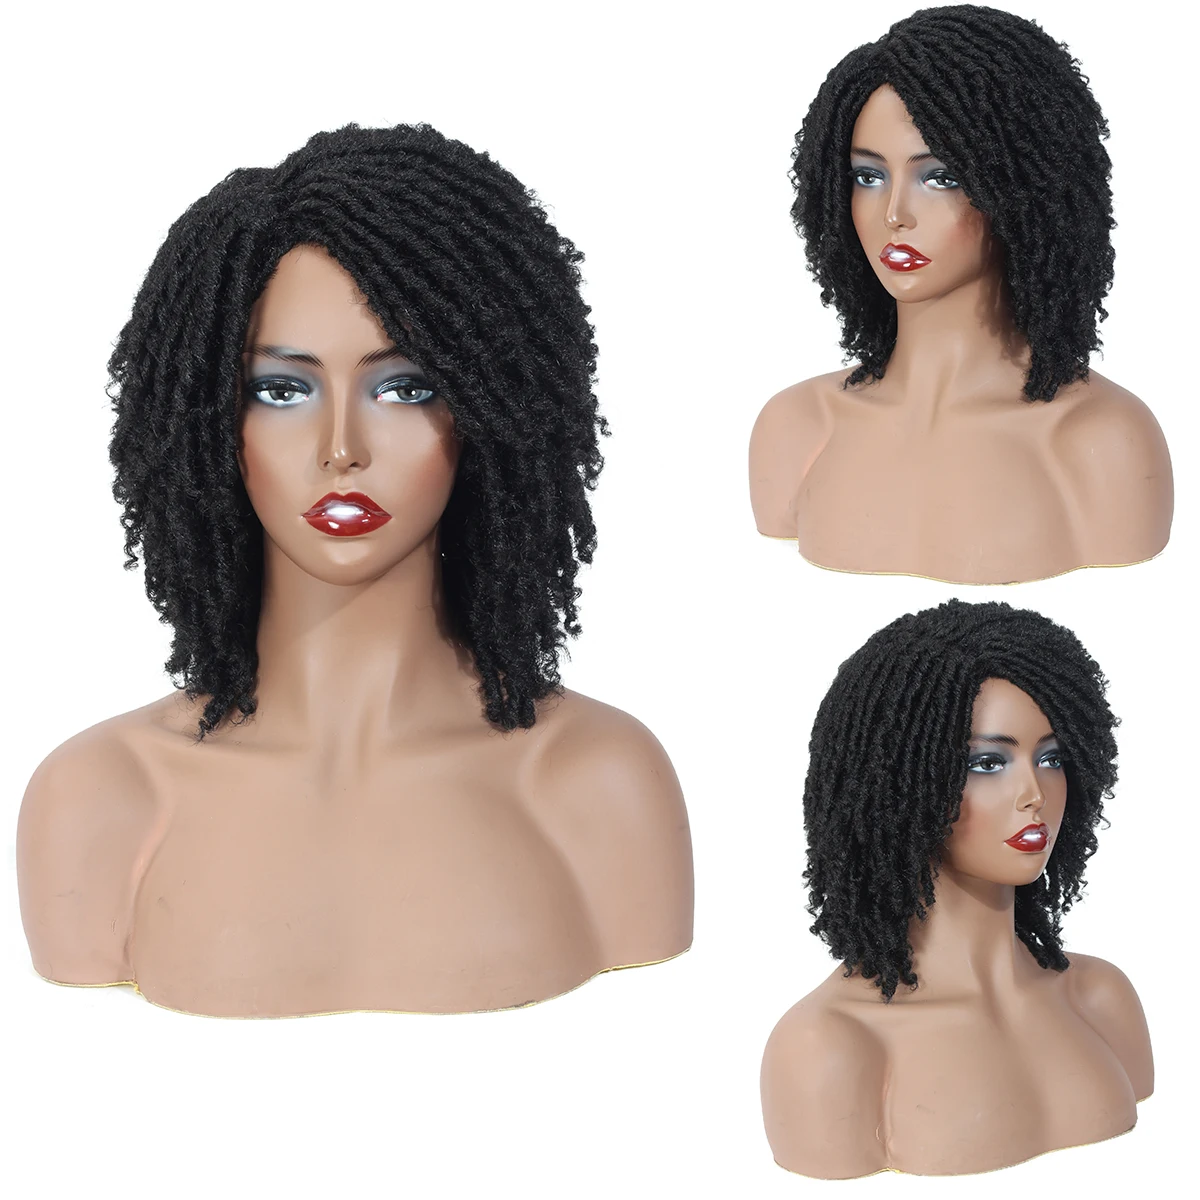 

Hot Selling Cheap Synthetic Hair Wigs for Black Women African Short Dreadlocks Wig Faux Locs Crochet Hair Braided Wigs, 1b,1b/27,1b/30,1b/burg,etc